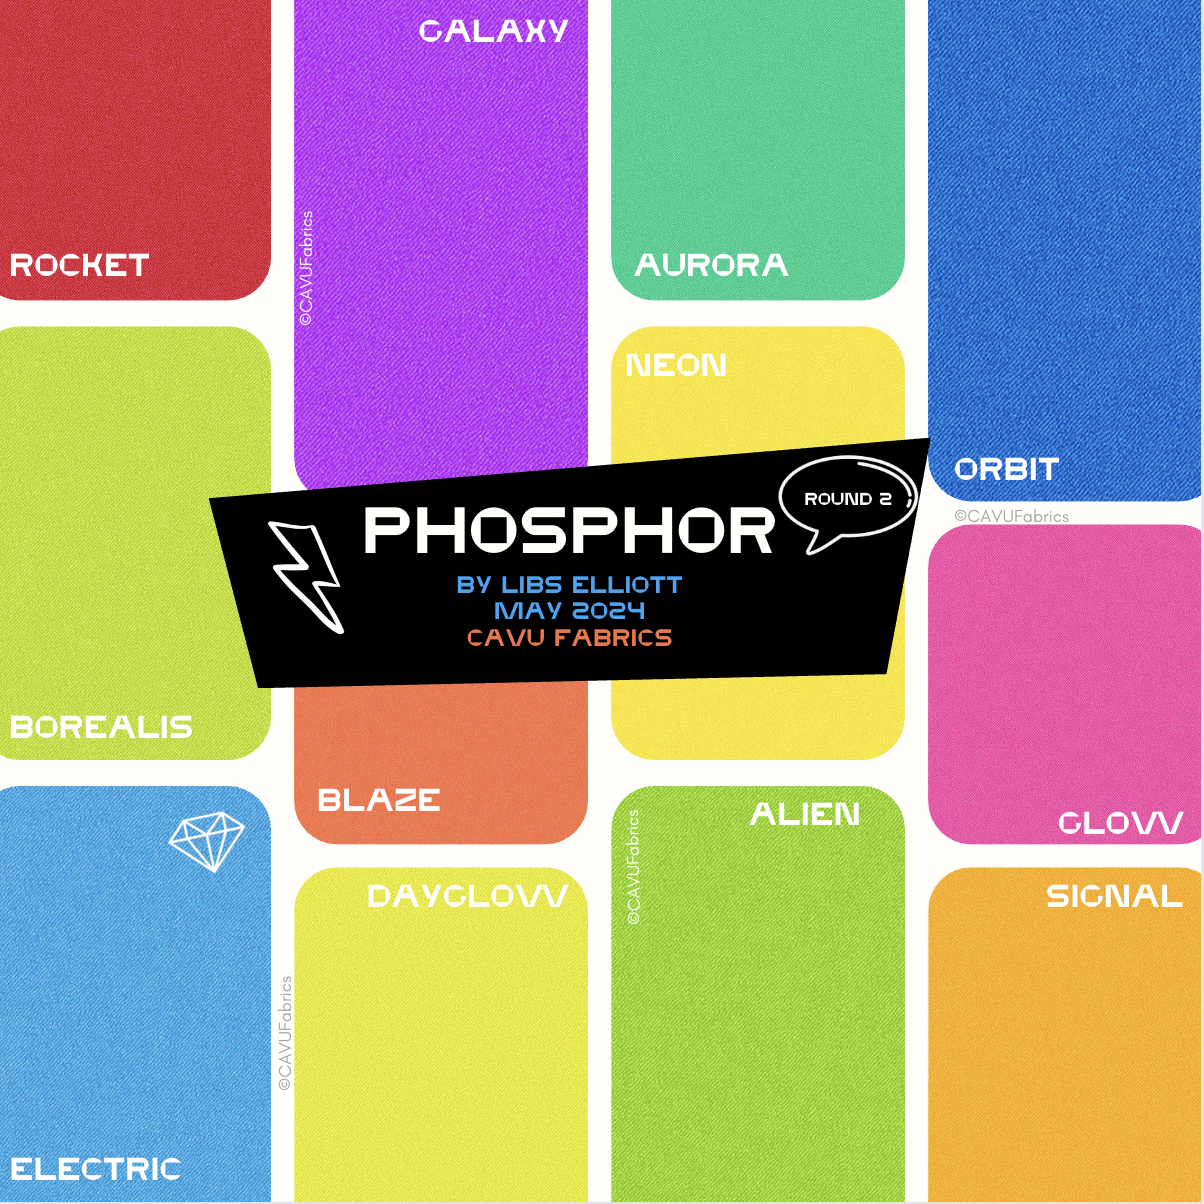 Blaze - Phosphor by Libs Elliott